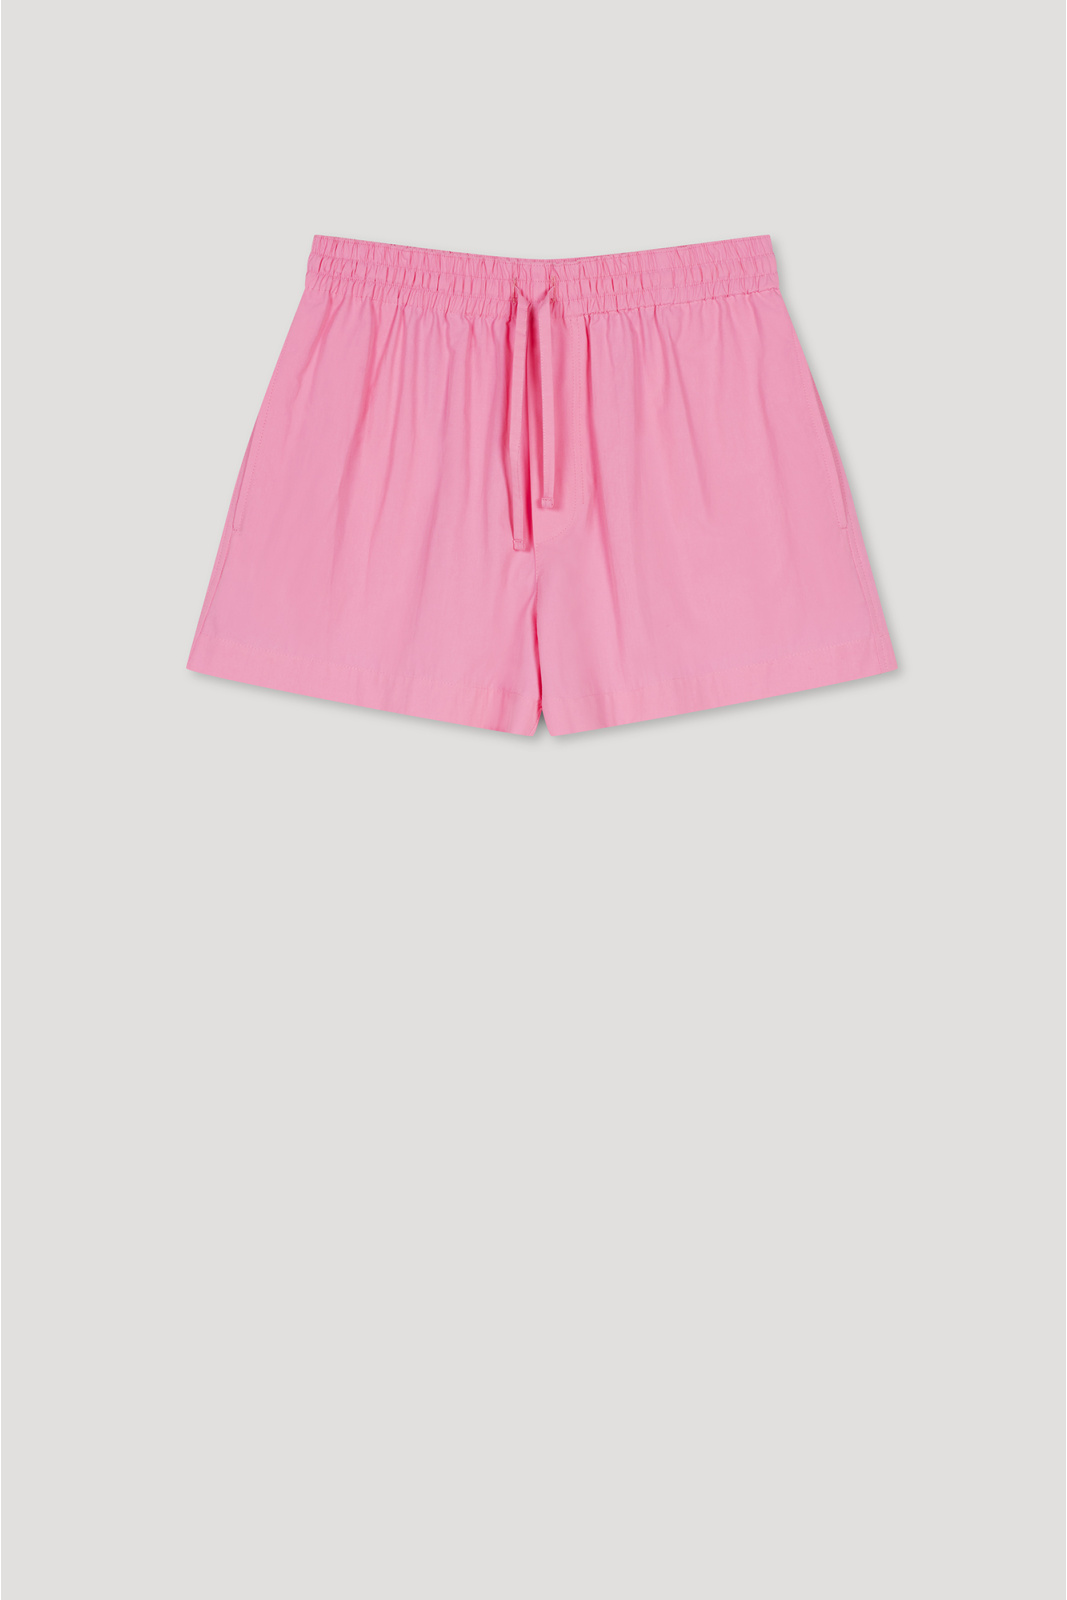 Callisto Poplin Shorts Pink Outlet Elementy